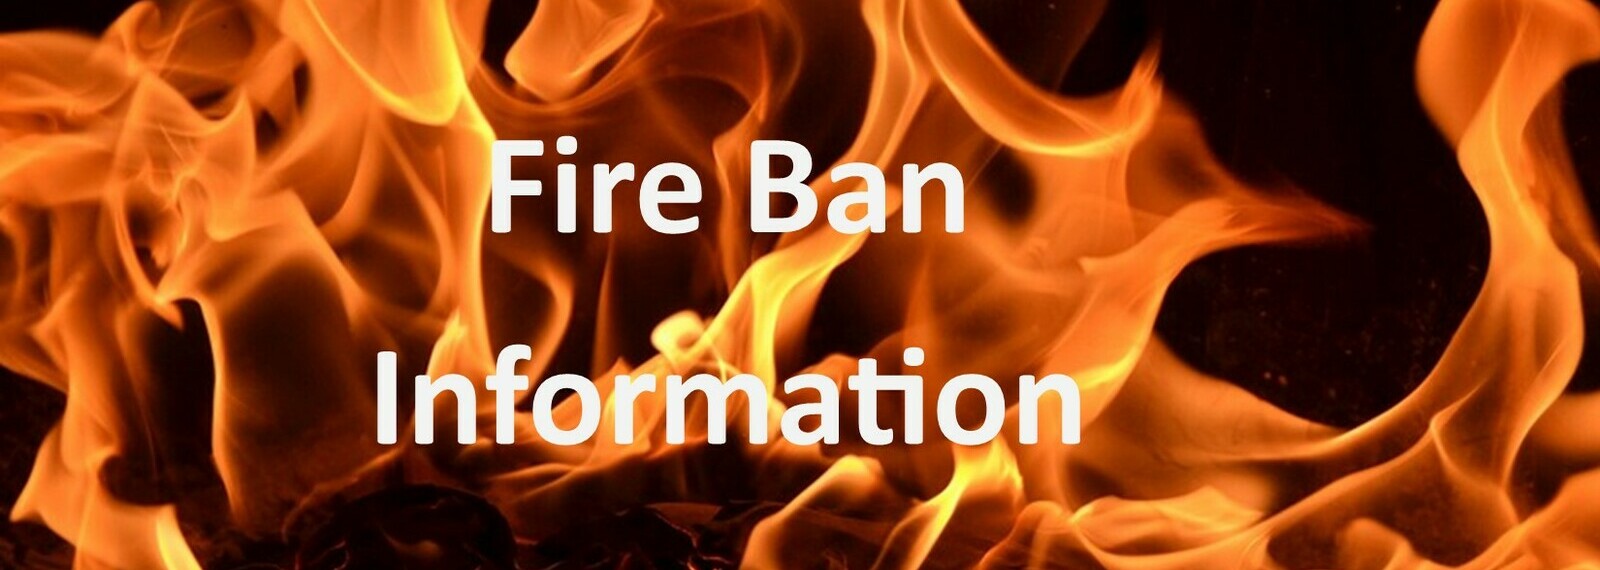 Fire Ban Information